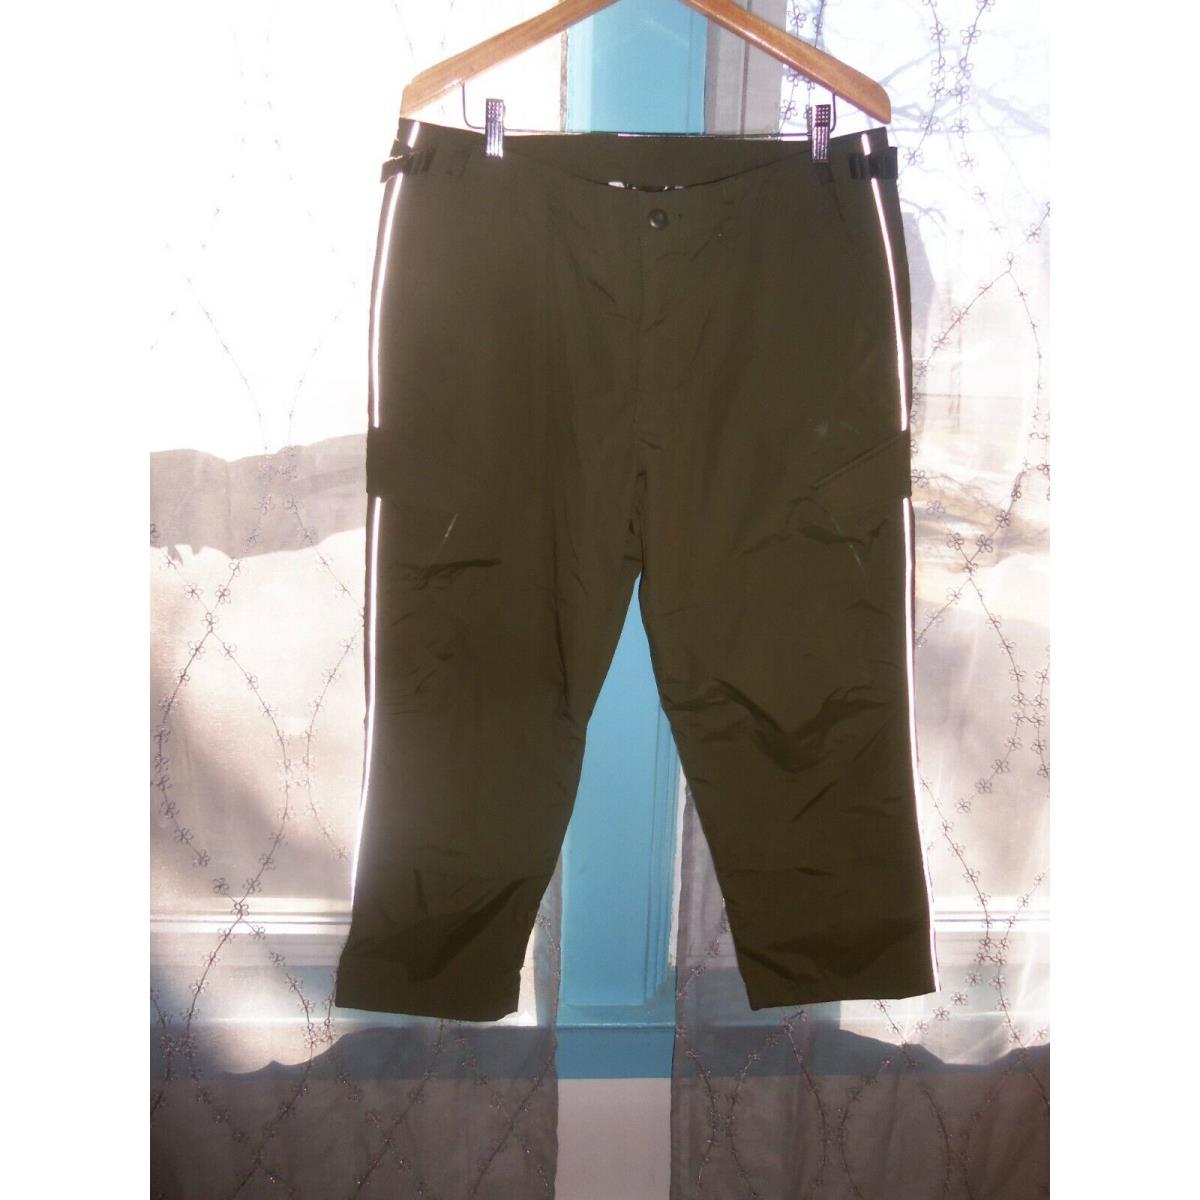 Puma Olive Green Cargo Pants Size Xxl . Price 170.00